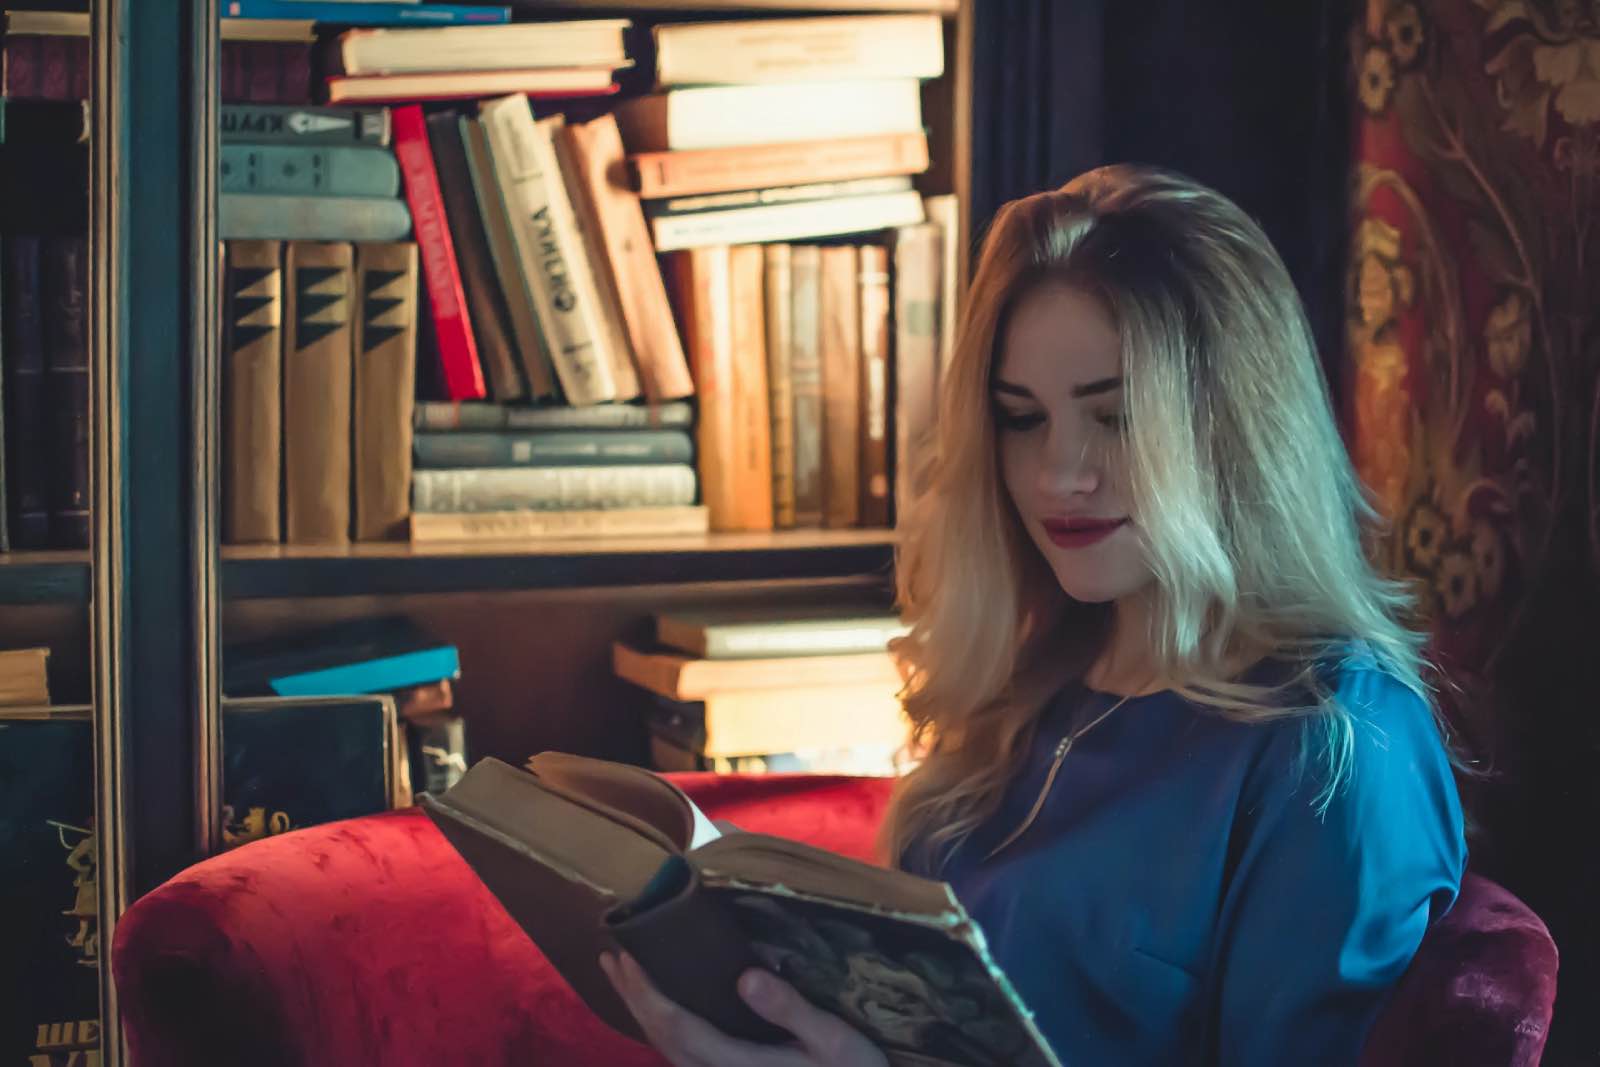 mujer leyendo con libros en rincón de lectura en casa almacenaje de libros